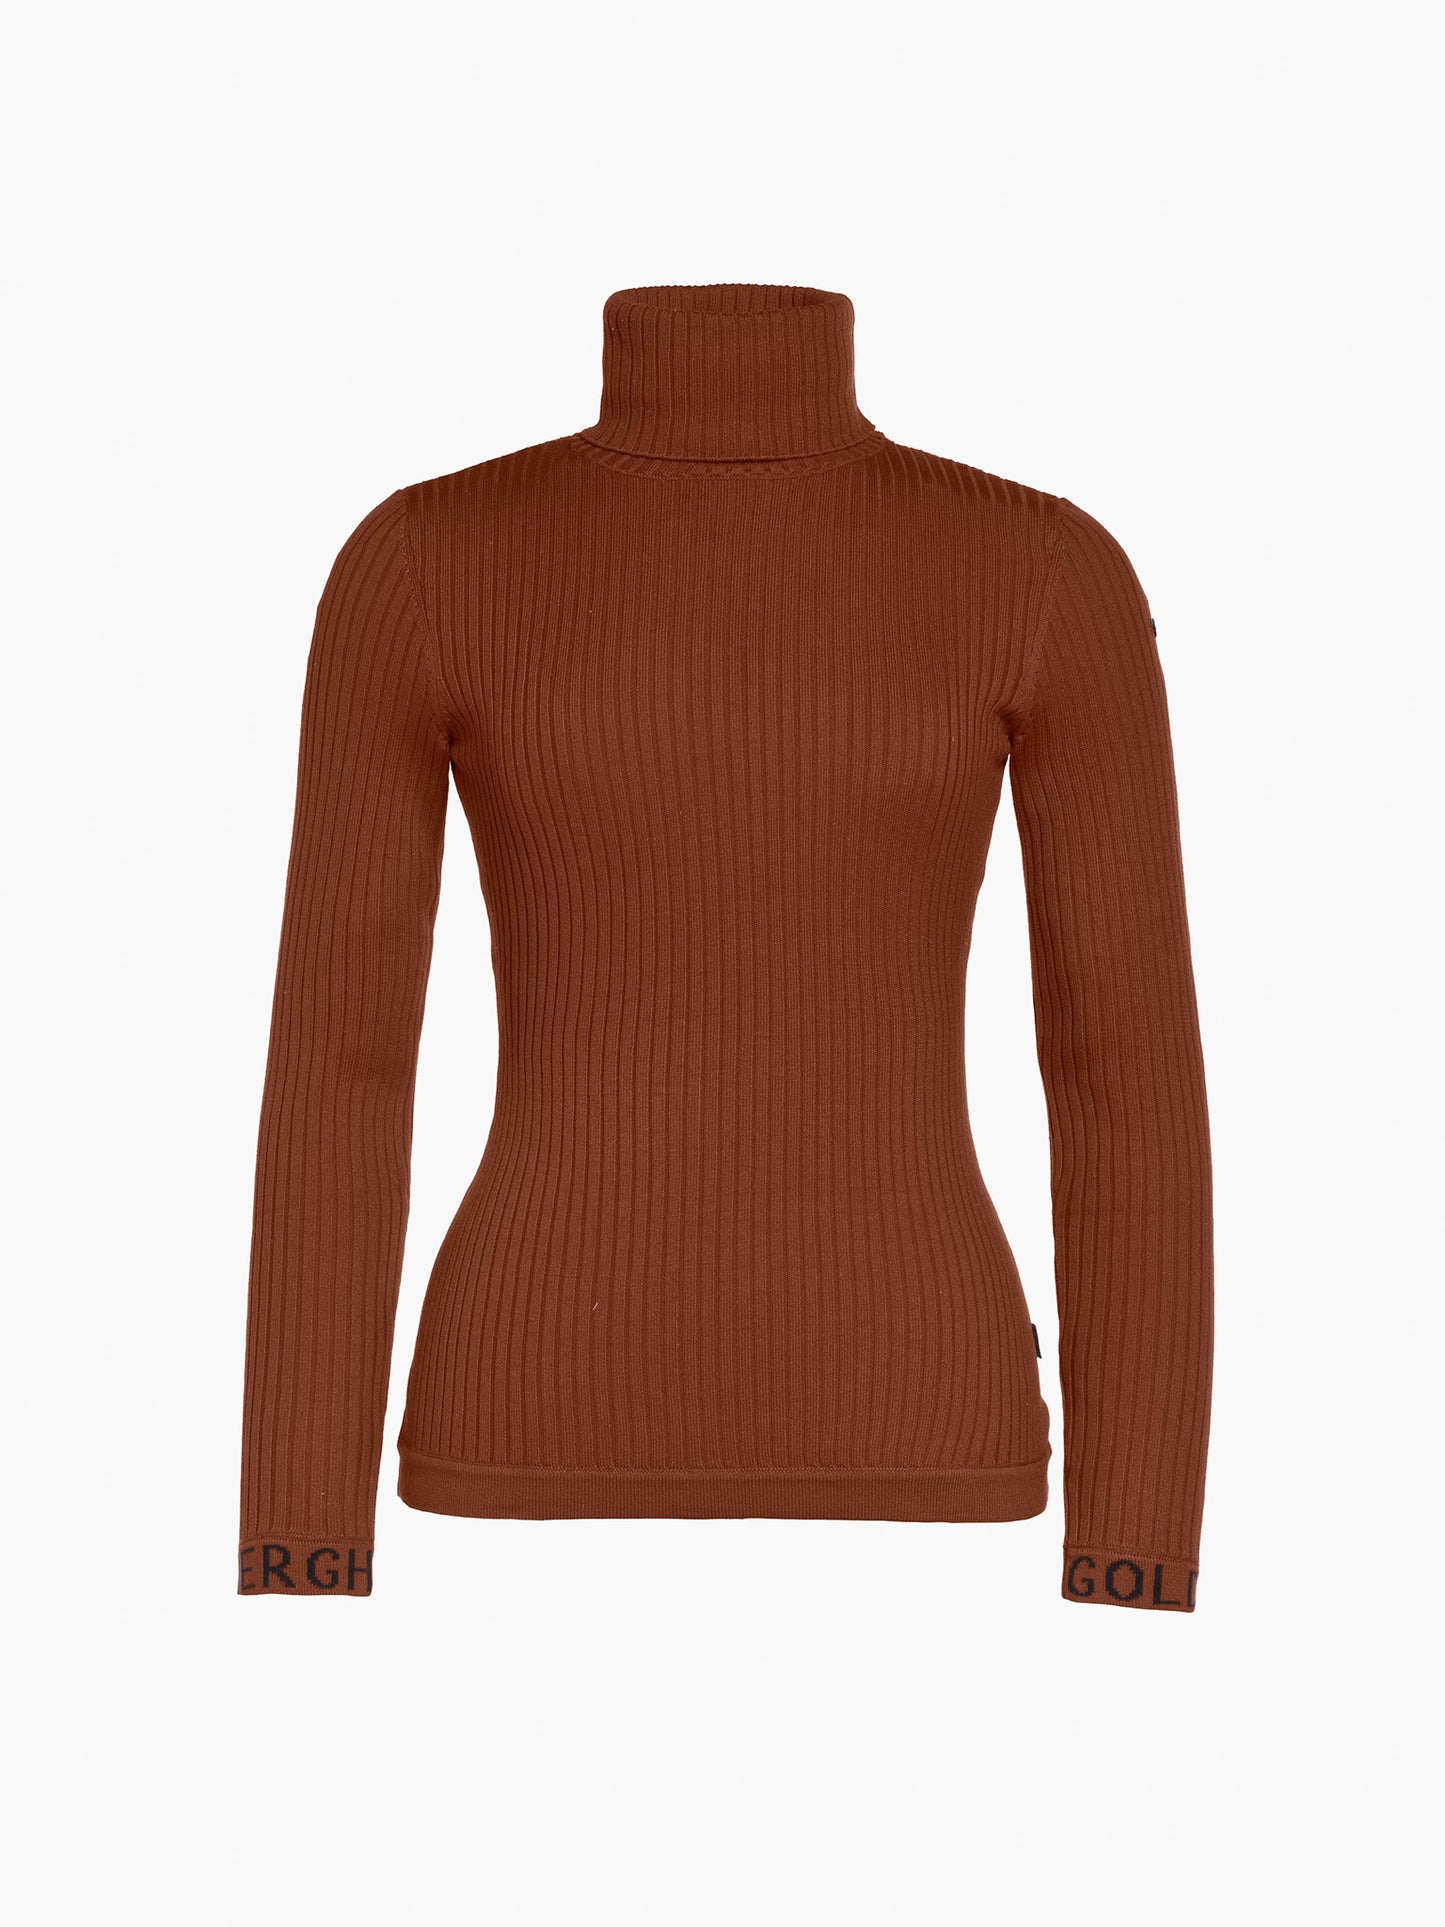 MIRA long sleeve knit sweater